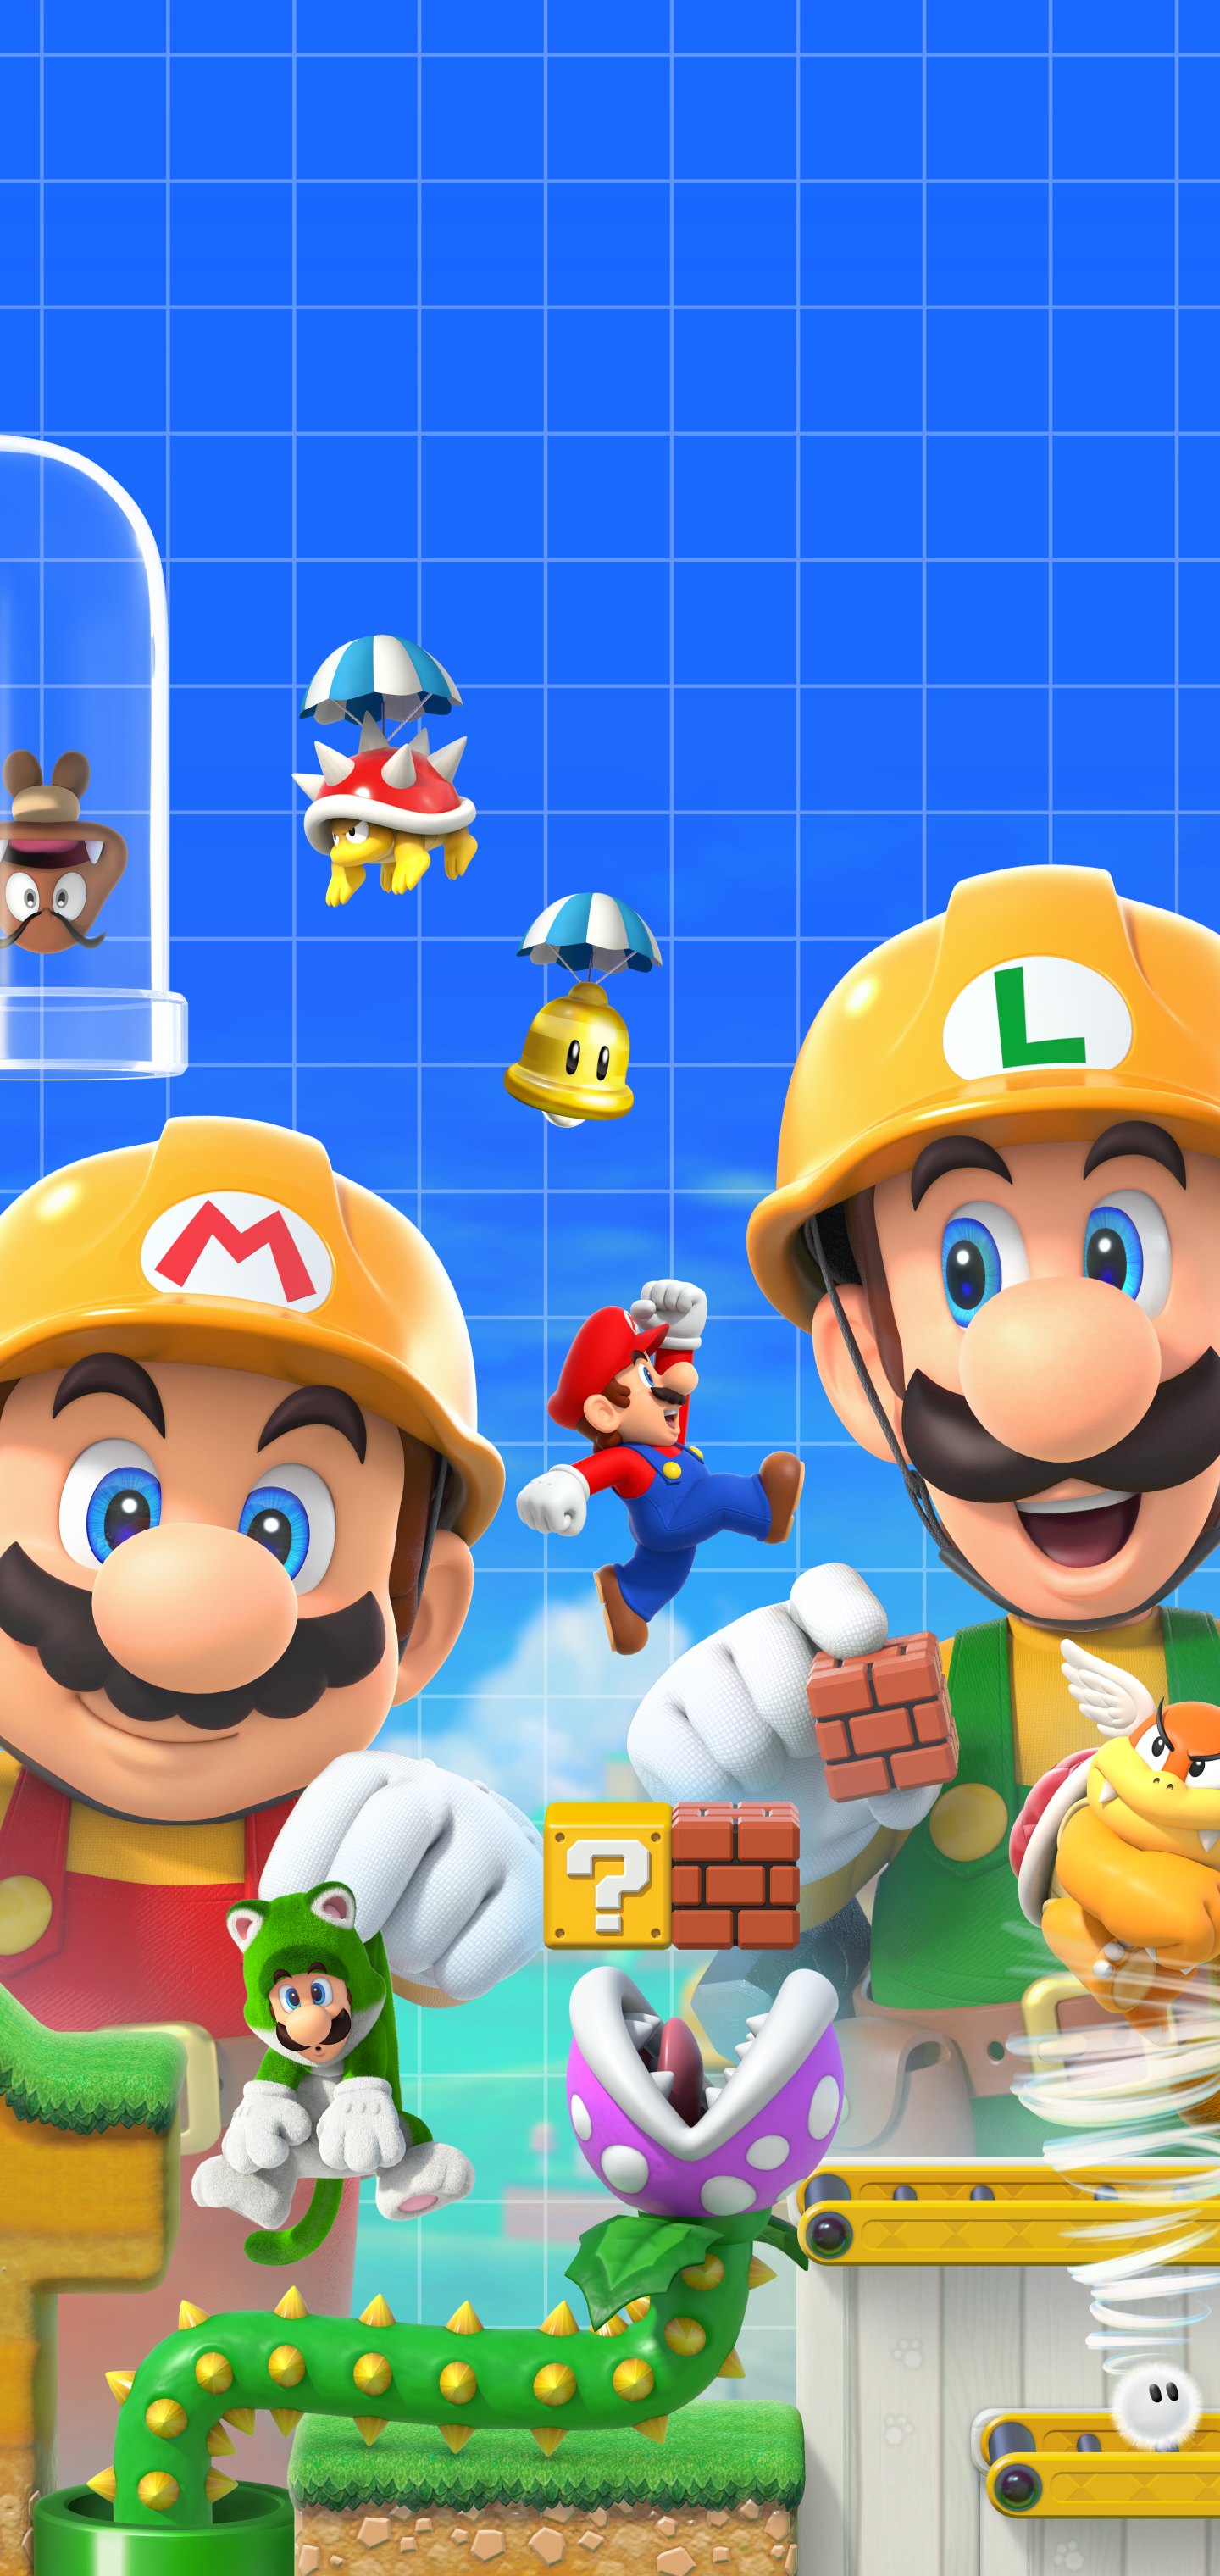 Wallpaper / Video Game Super Mario Maker 2 Phone Wallpaper, Mario, Goomba, Luigi, Toad (Mario), 1440x3040 free download